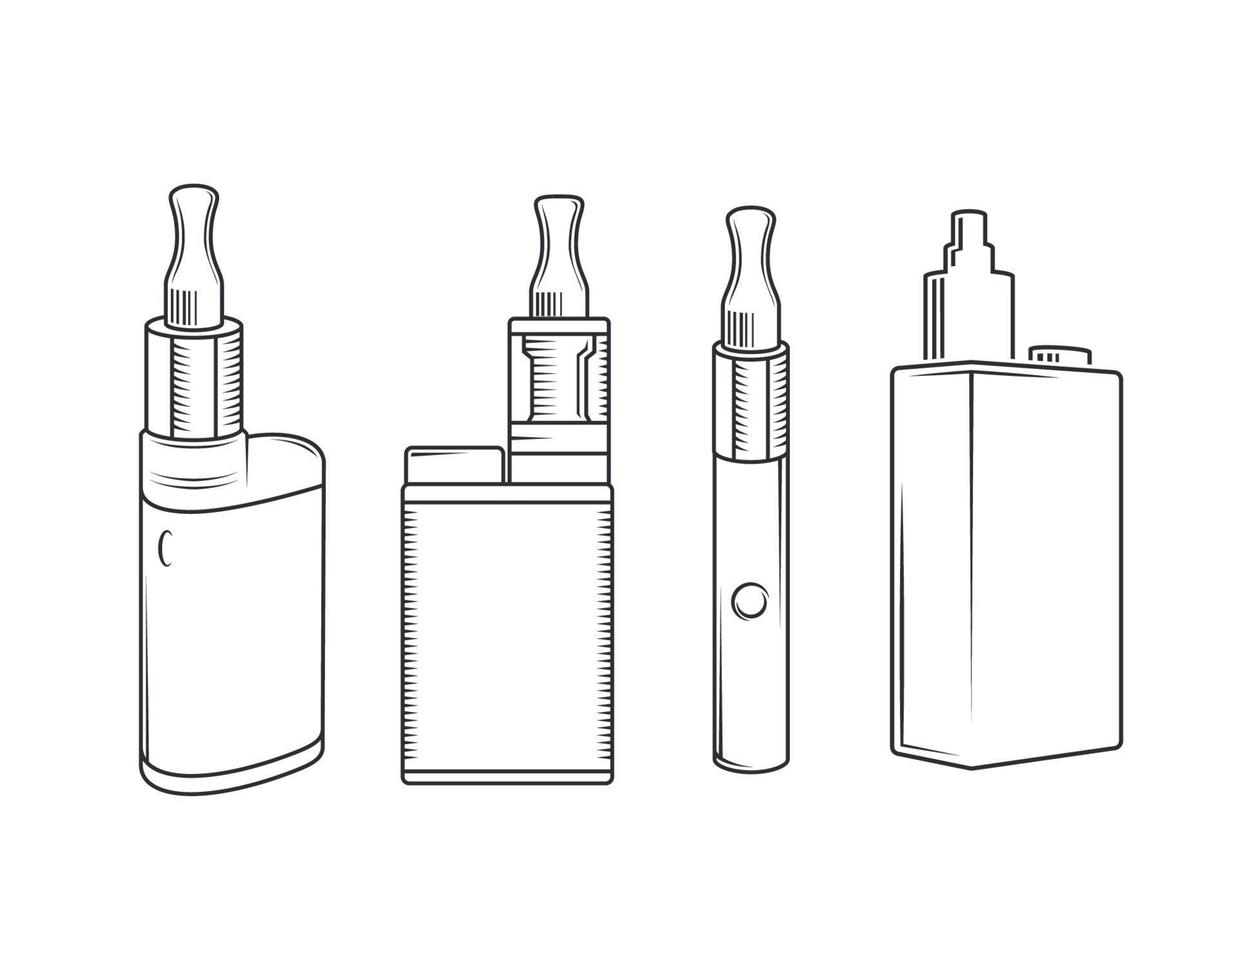 vaporizer cigarette icons, vape black, outline icons on a white background vector